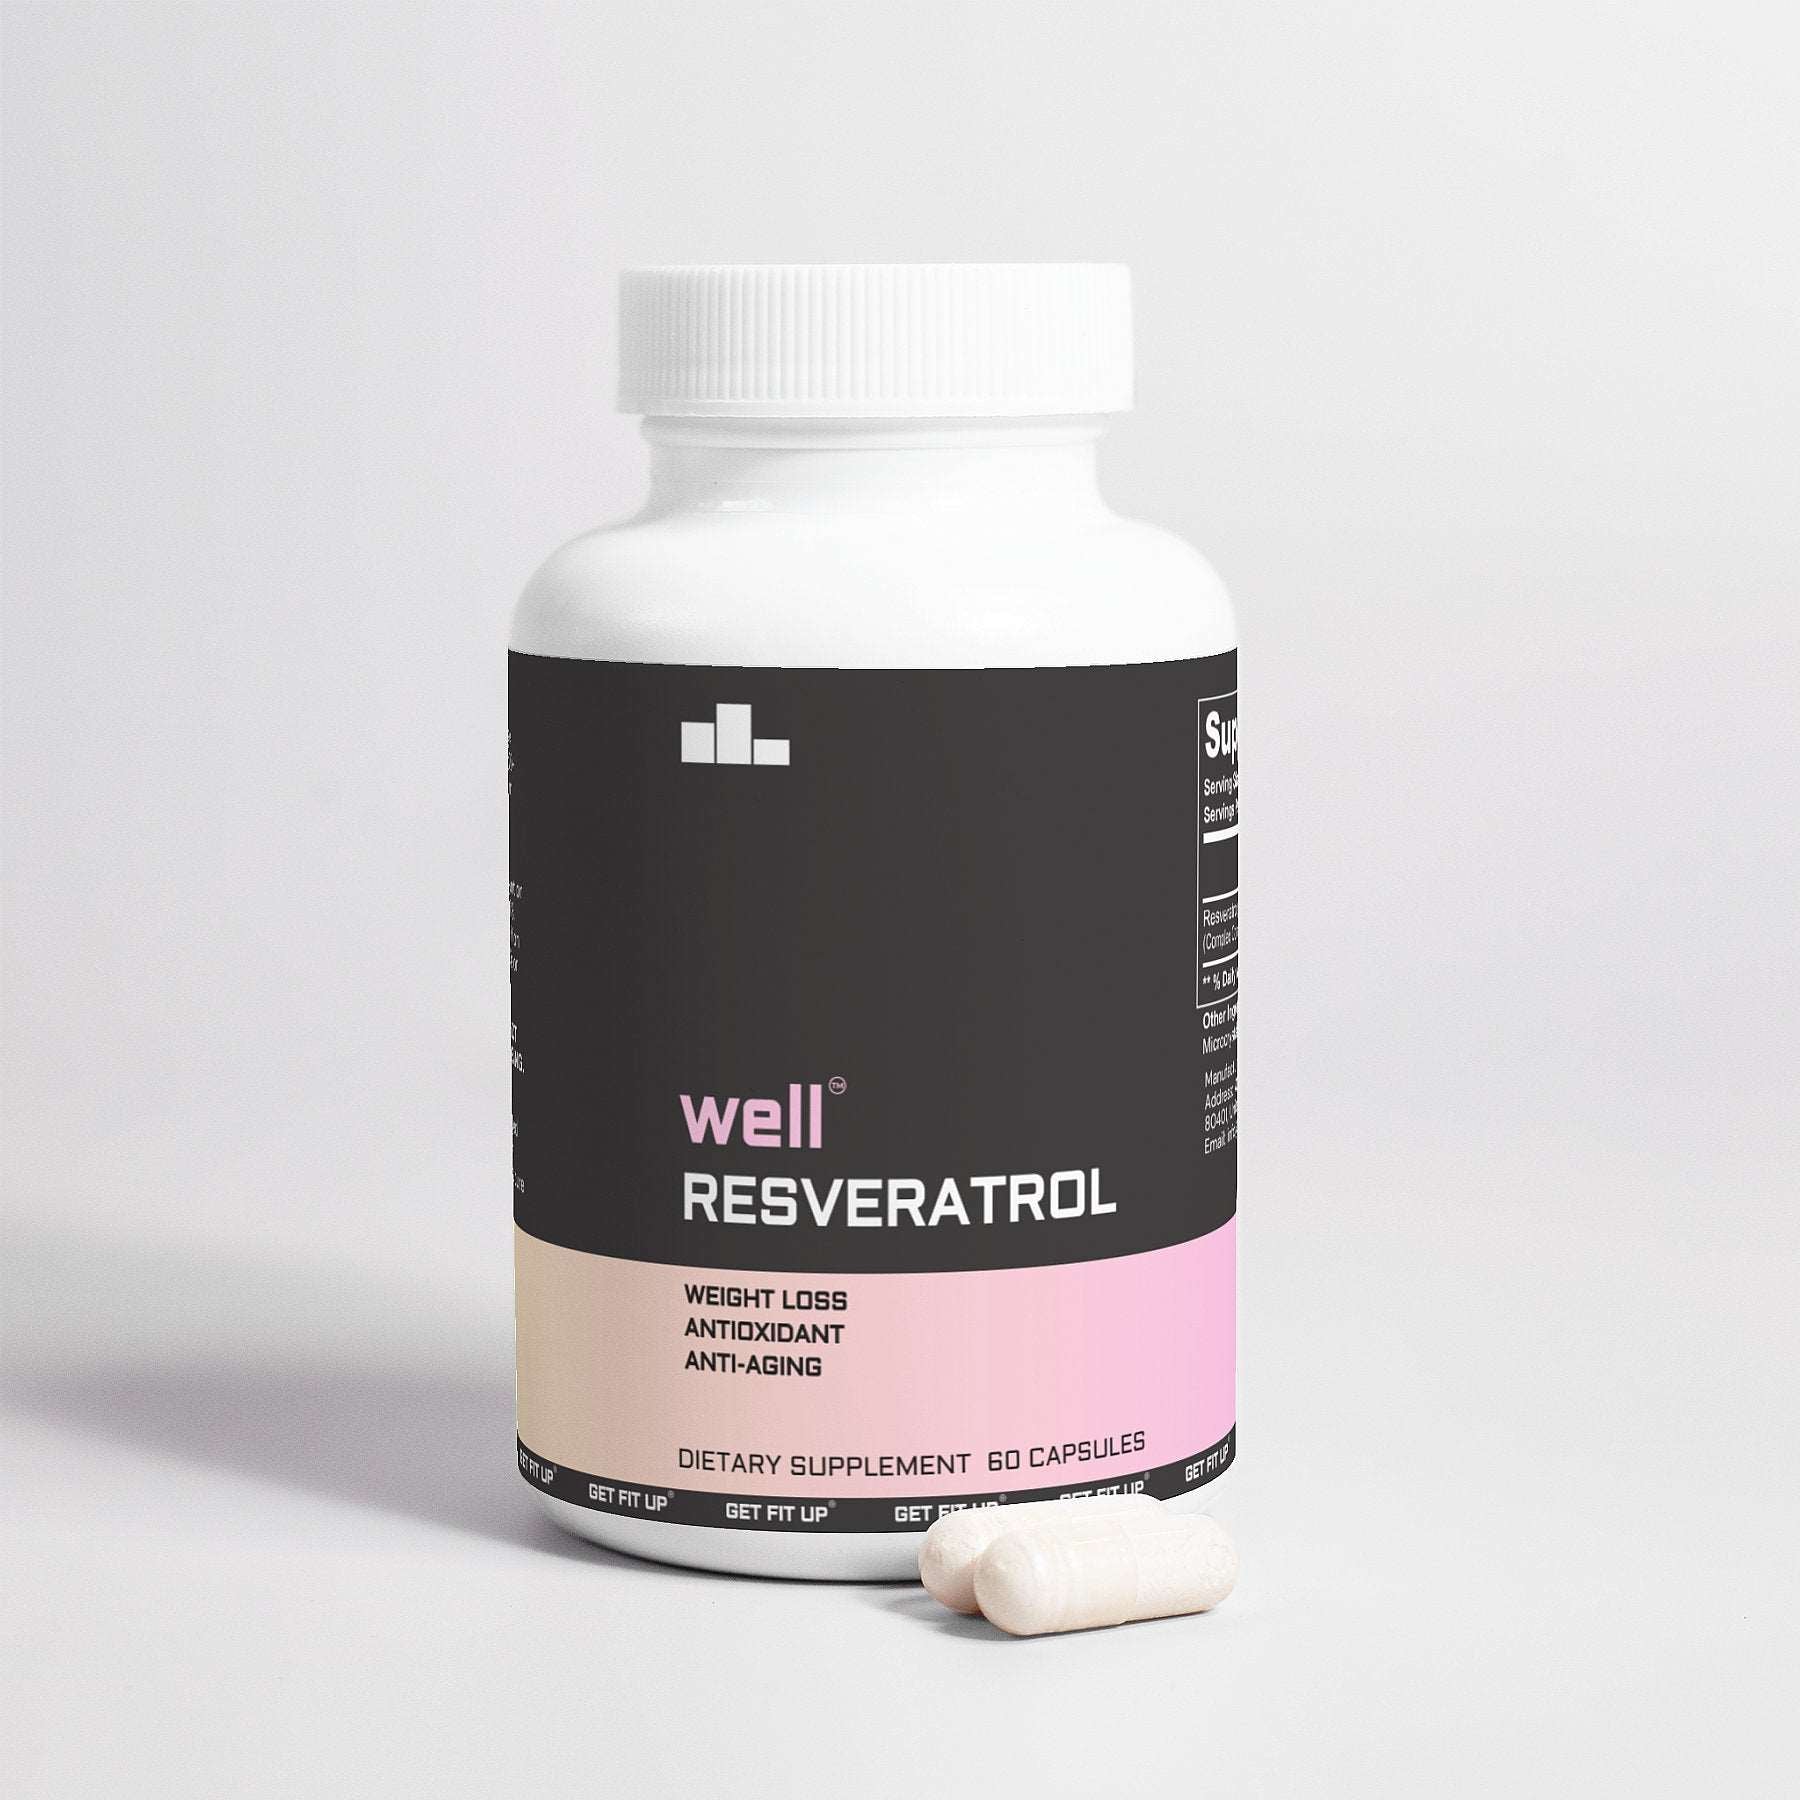 well® Resveratrol